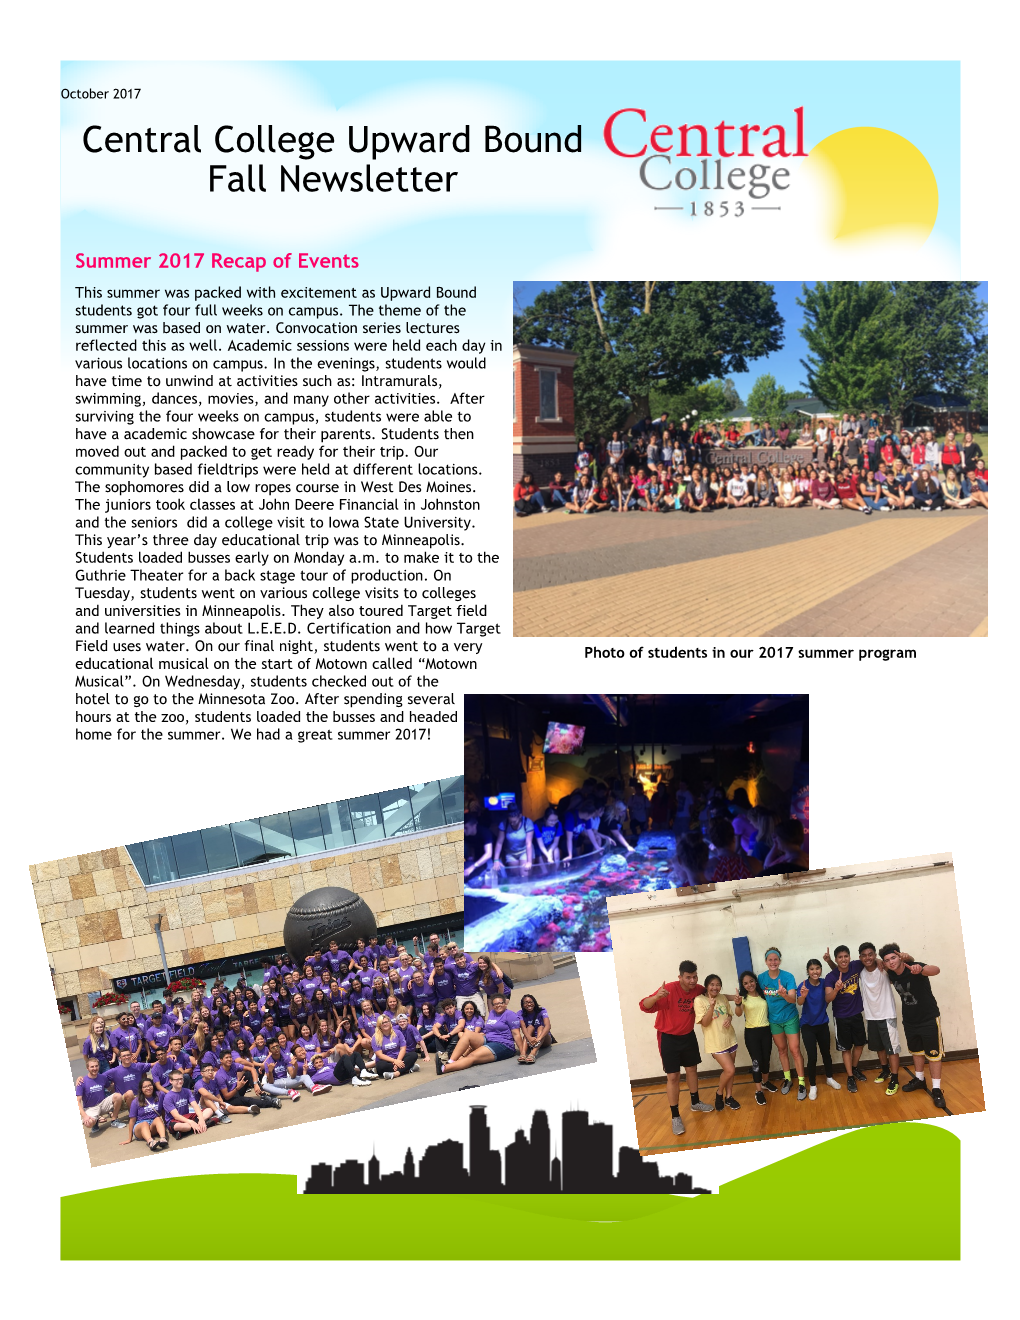 Central College Upward Bound Fall Newsletter